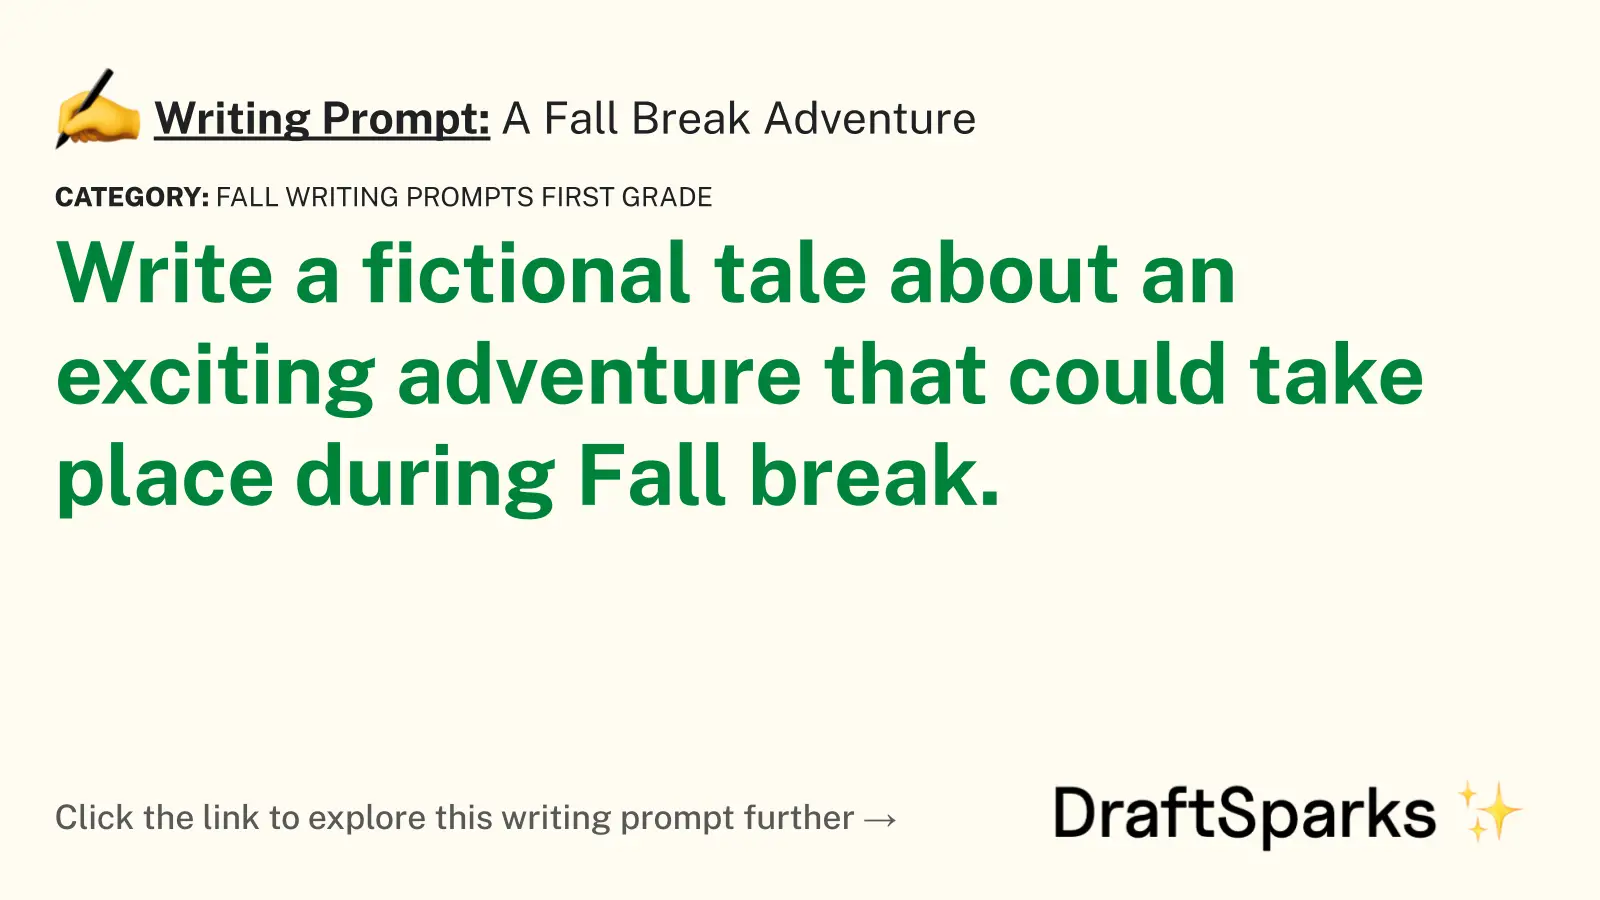 A Fall Break Adventure